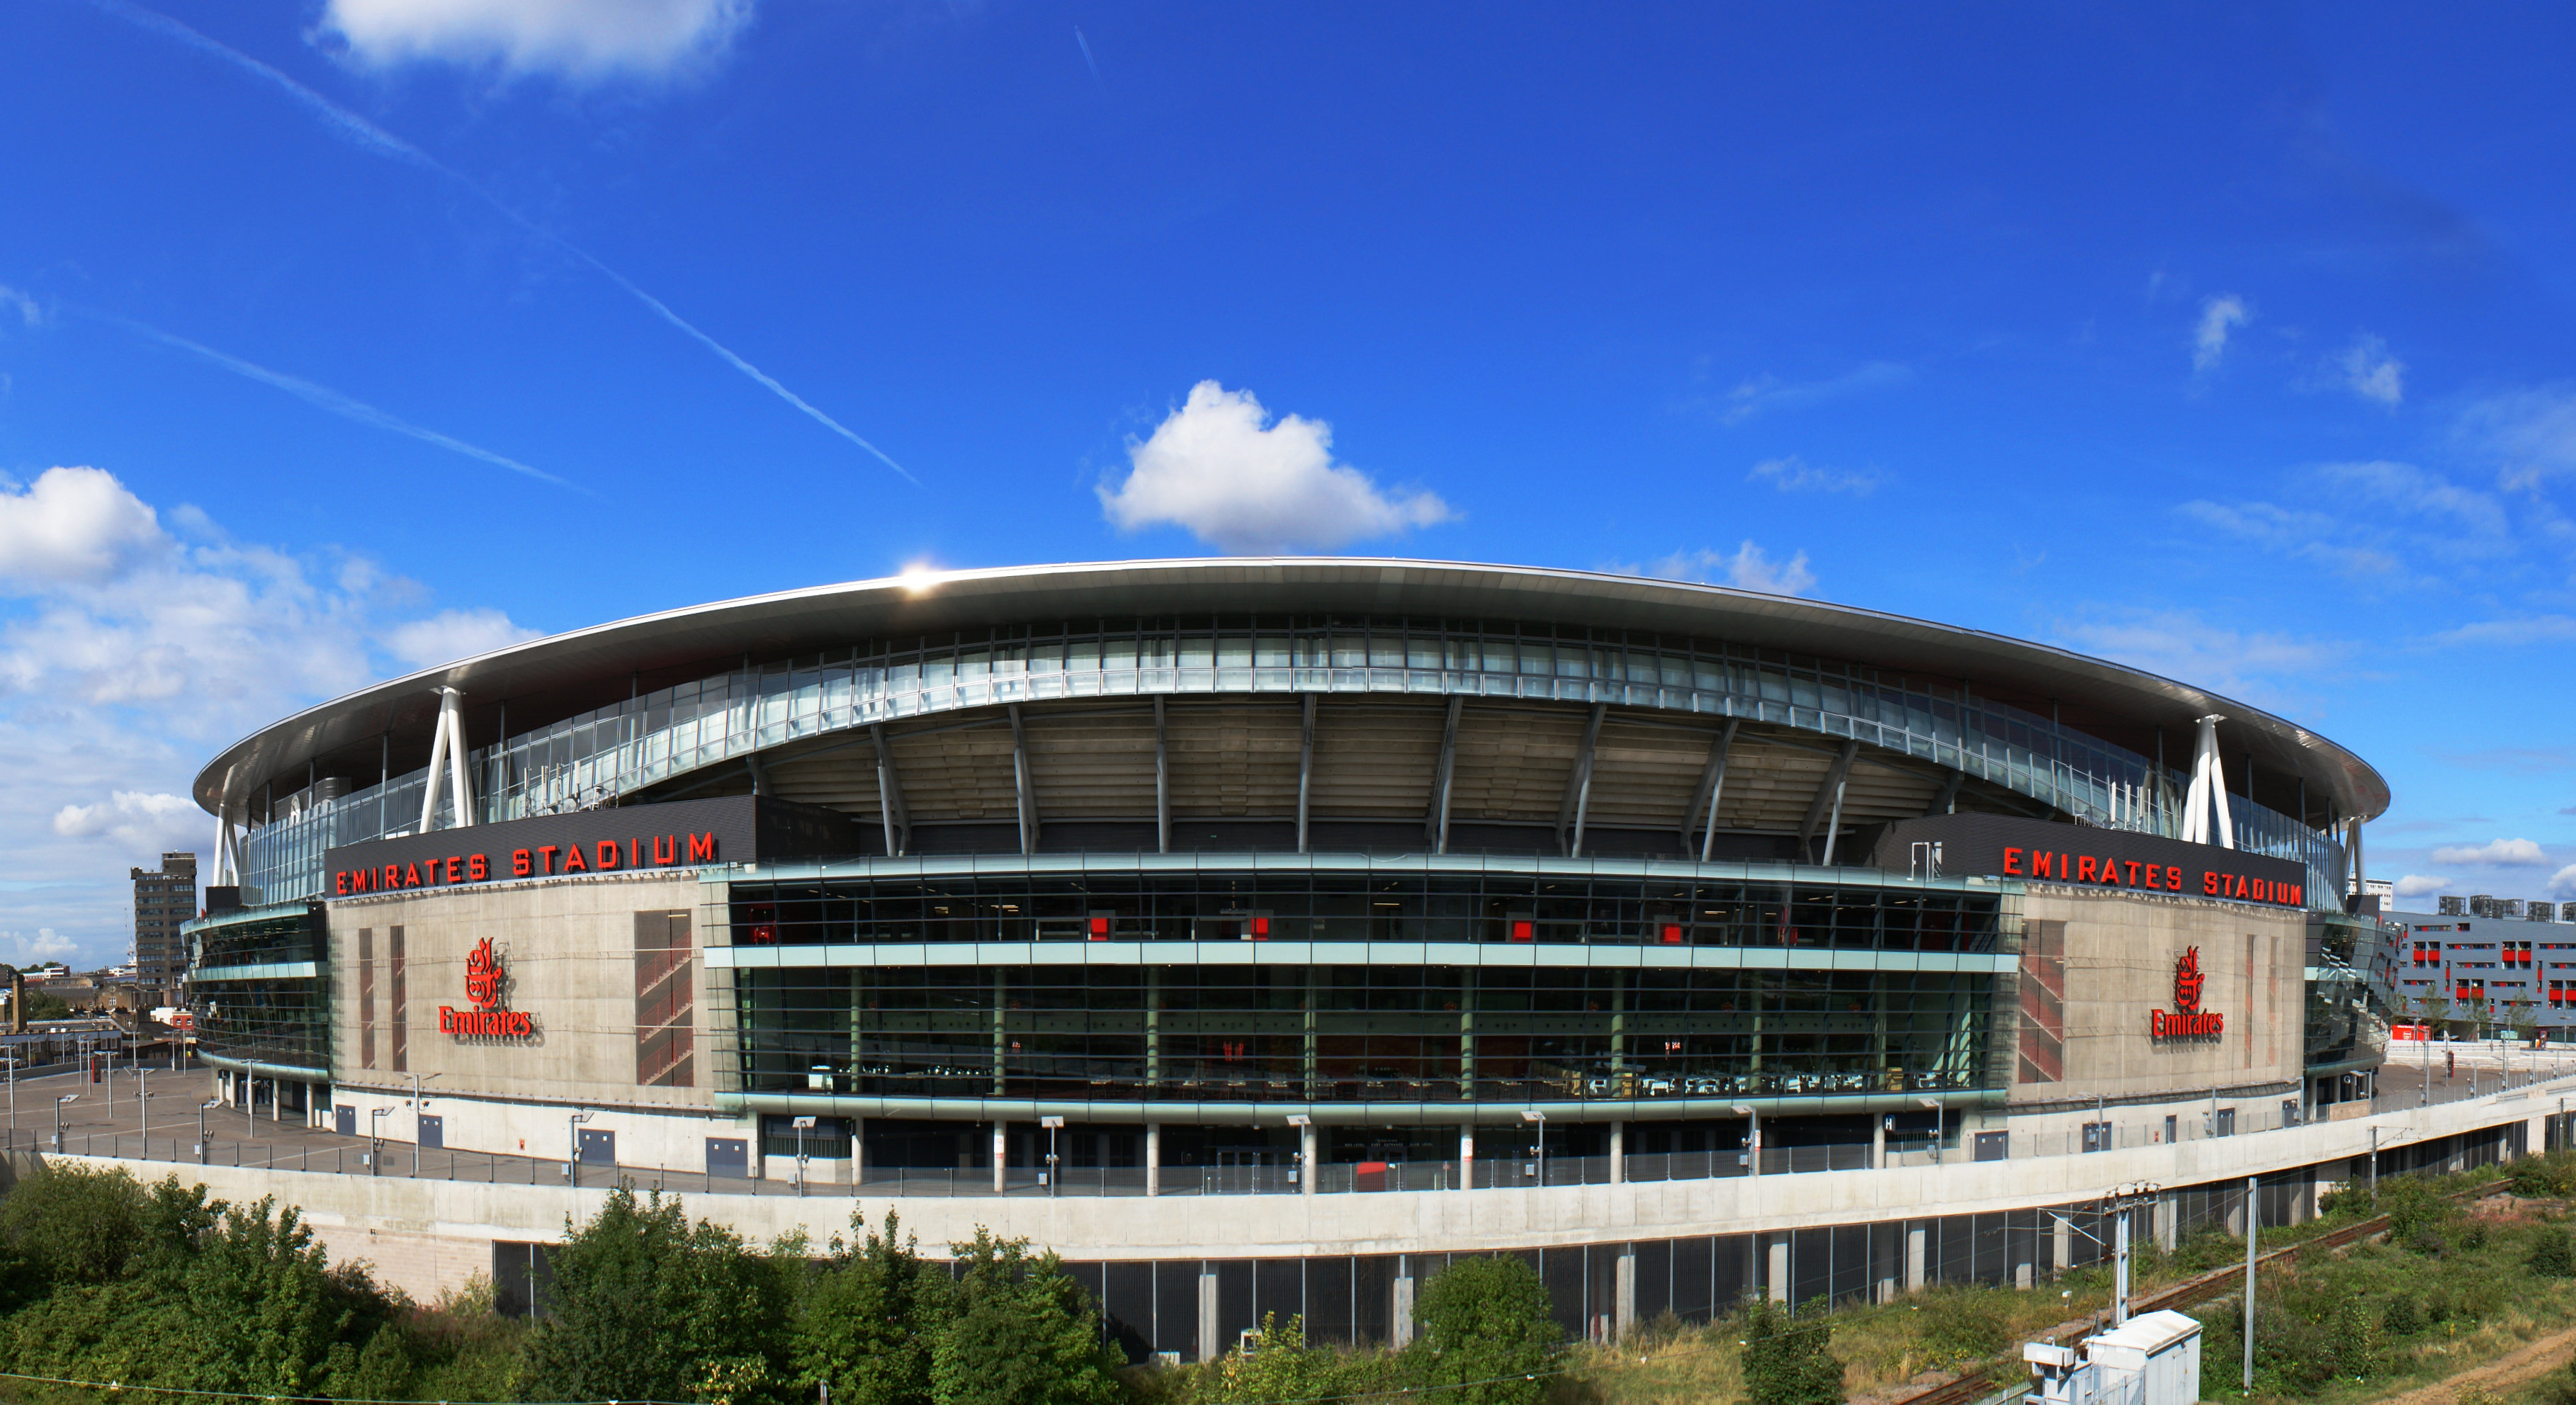 Emirates_Stadium_-_East_side_-_Composite.jpg